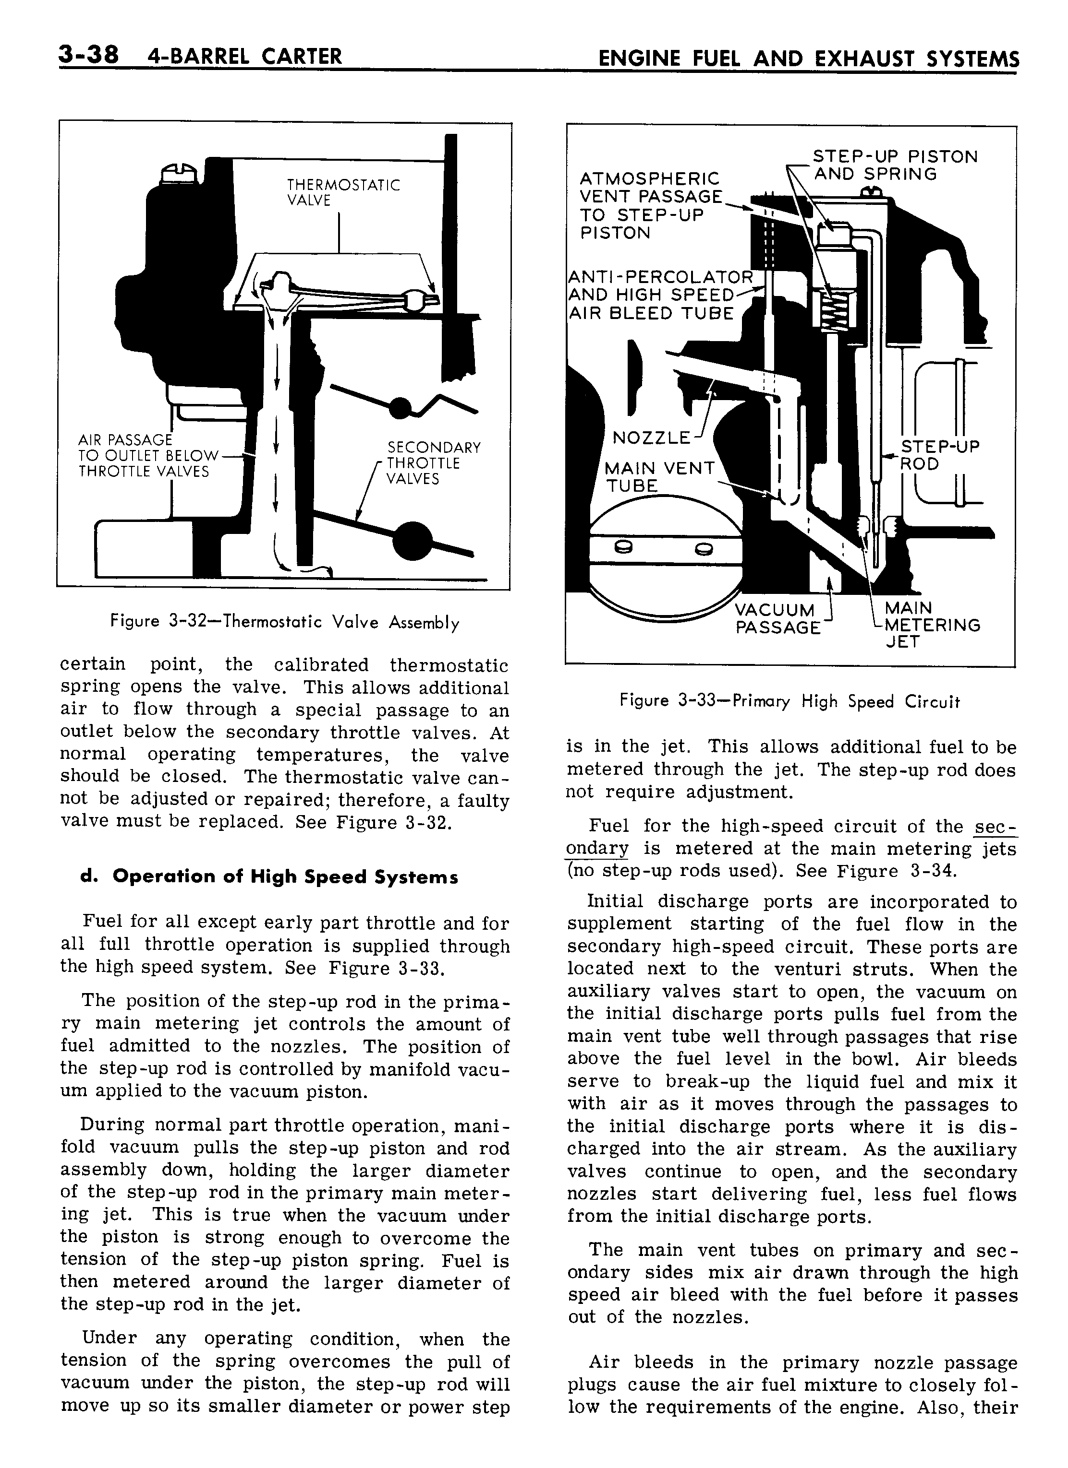 n_04 1961 Buick Shop Manual - Engine Fuel & Exhaust-038-038.jpg